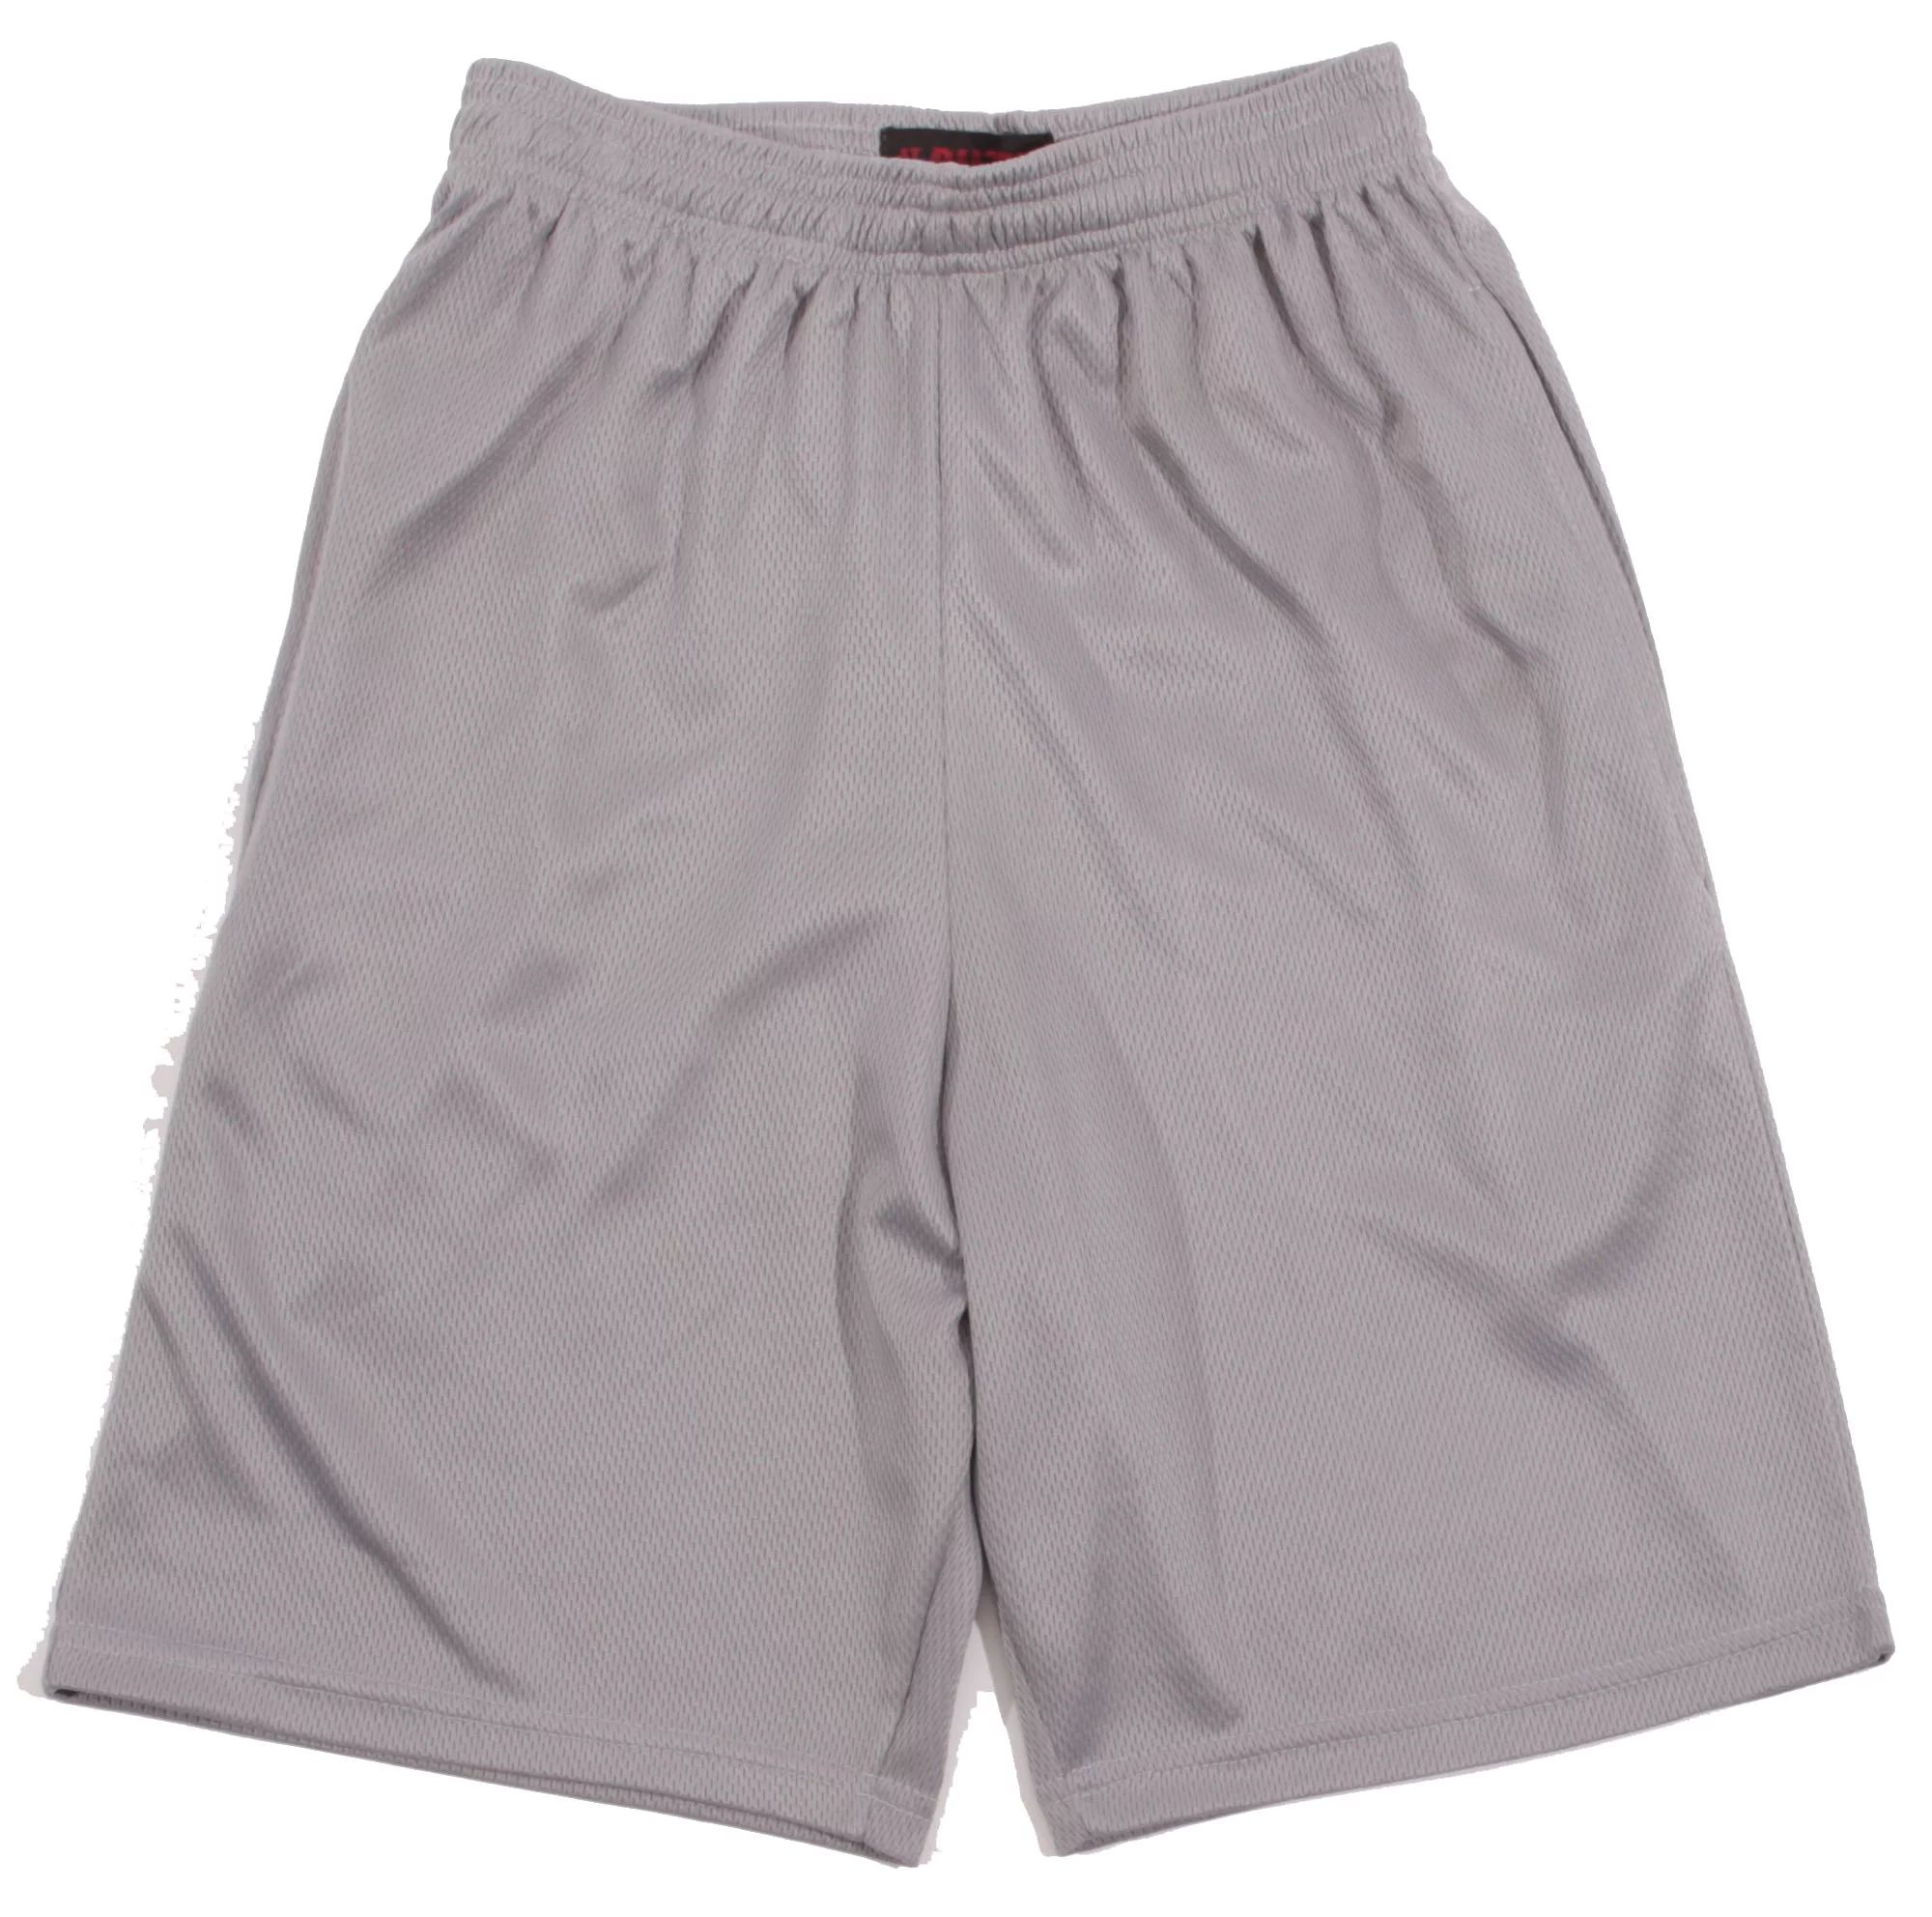 At The Buzzer Boys Athletic Shorts 77726-GRY-8 (Grey, Boys 8) | Walmart (US)